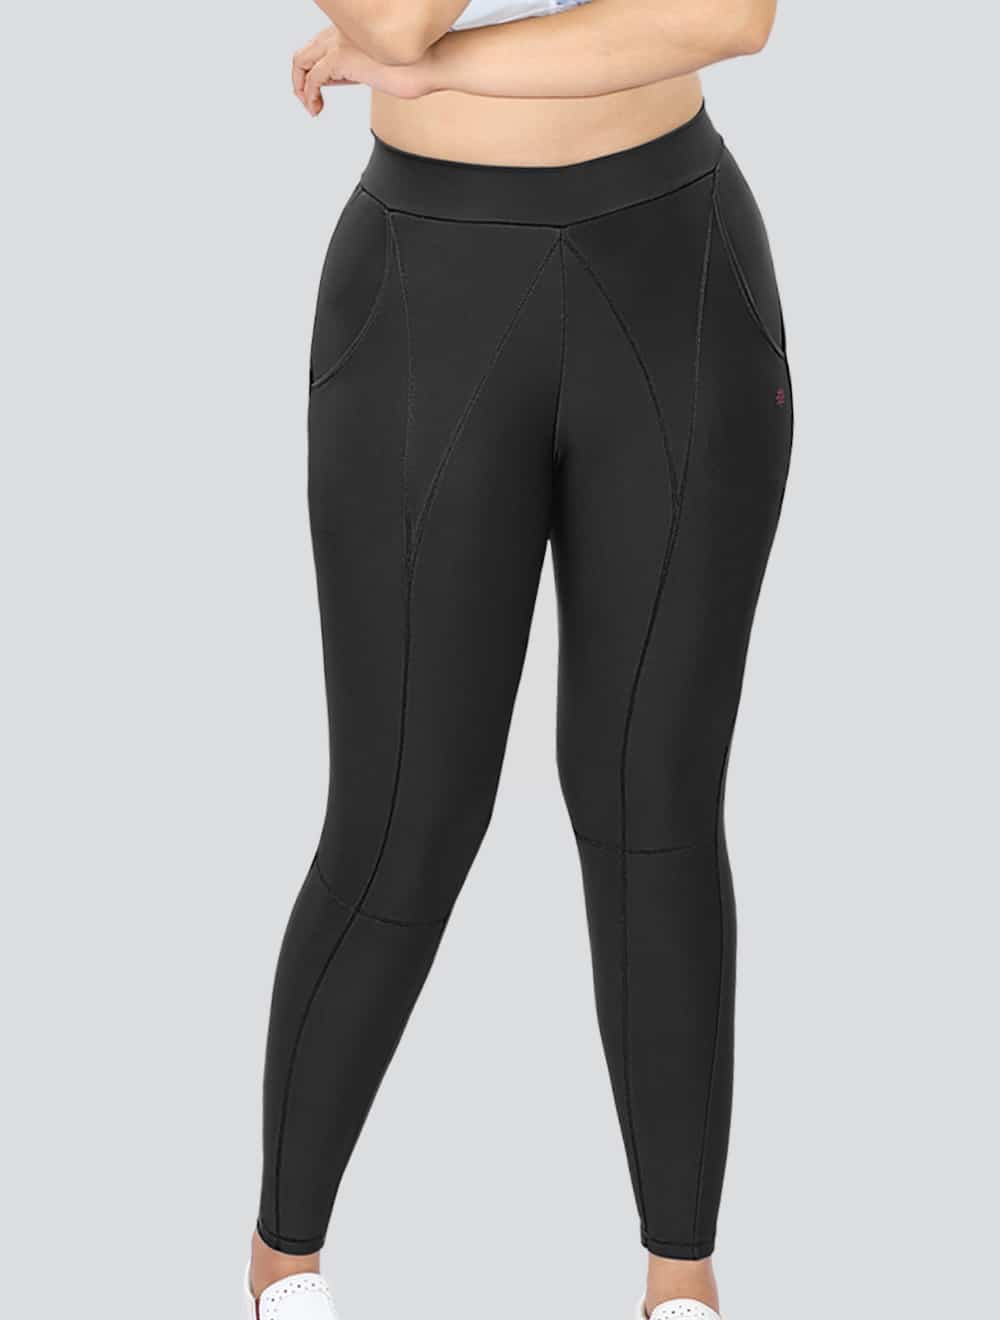 Tek Gear Women Activewear Jogger Pants On the Go Workout Stretch Black 3X  NEW | eBay